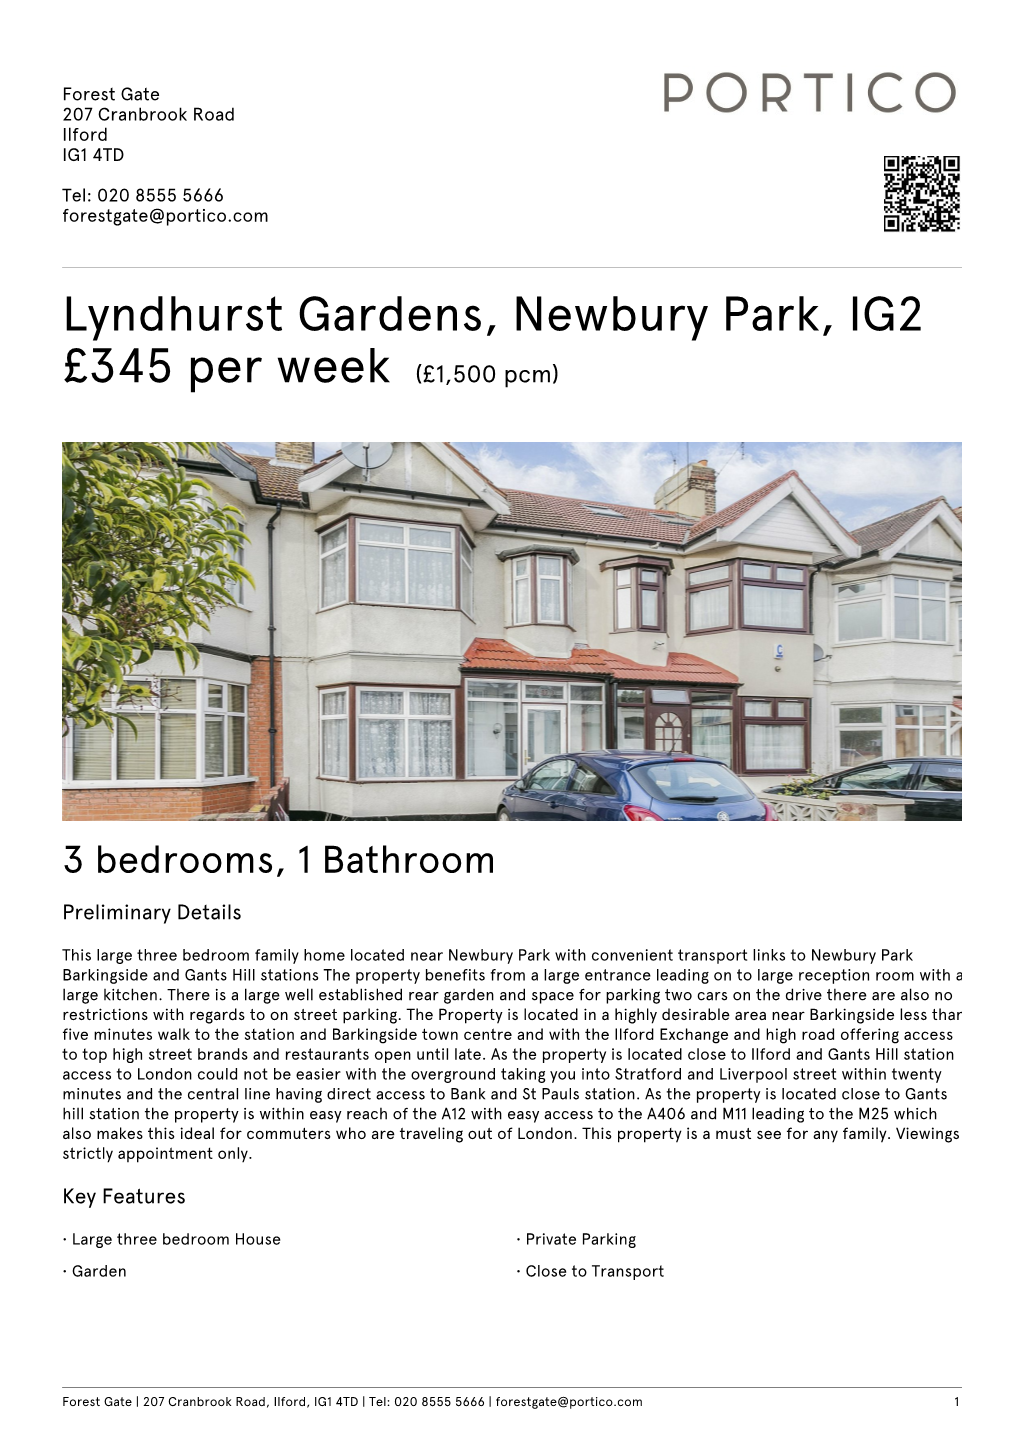 Lyndhurst Gardens, Newbury Park, IG2 £345 Per Week